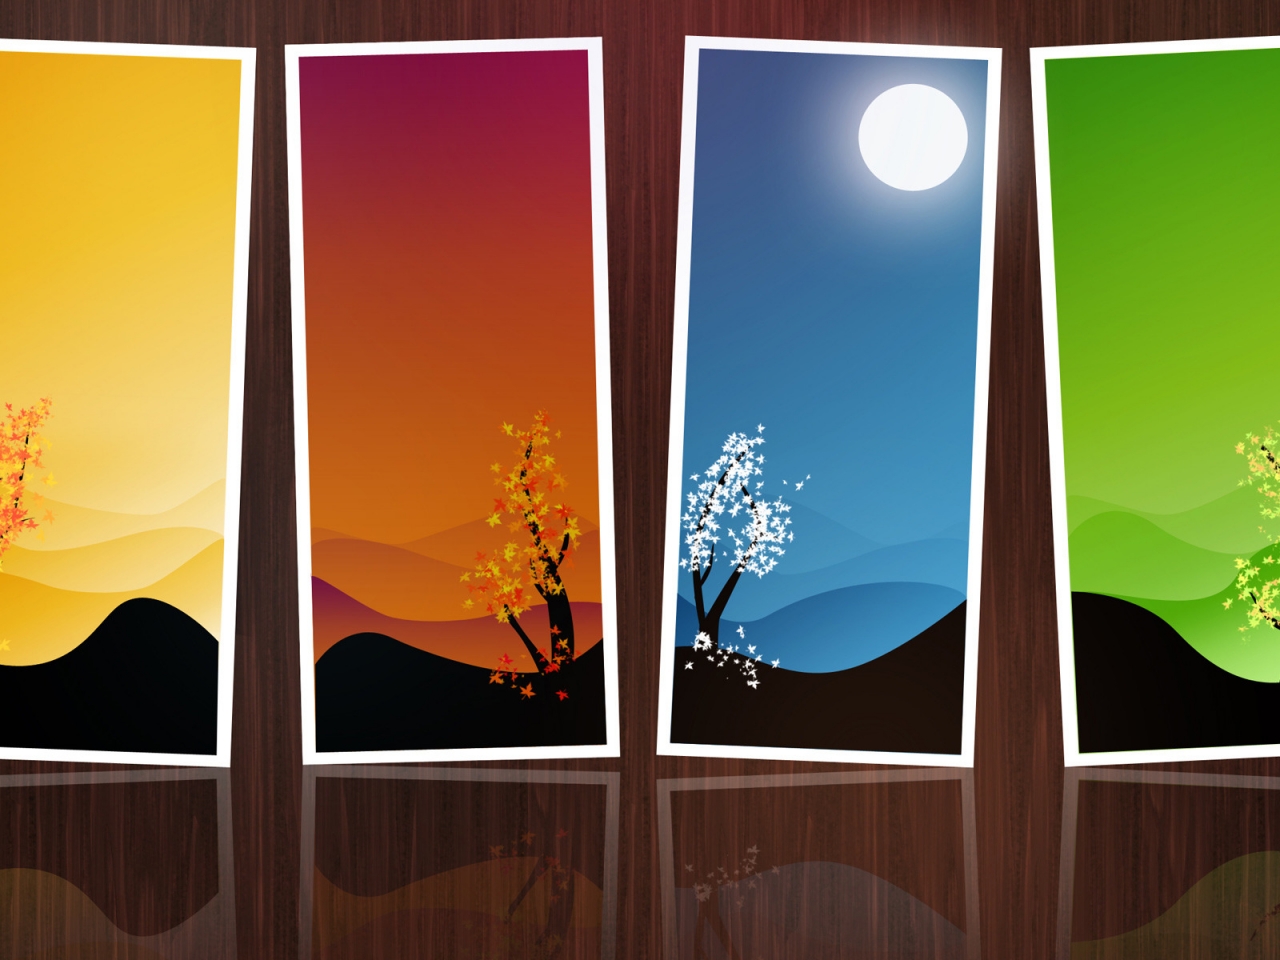 4 Seasons Frames for 1280 x 960 resolution